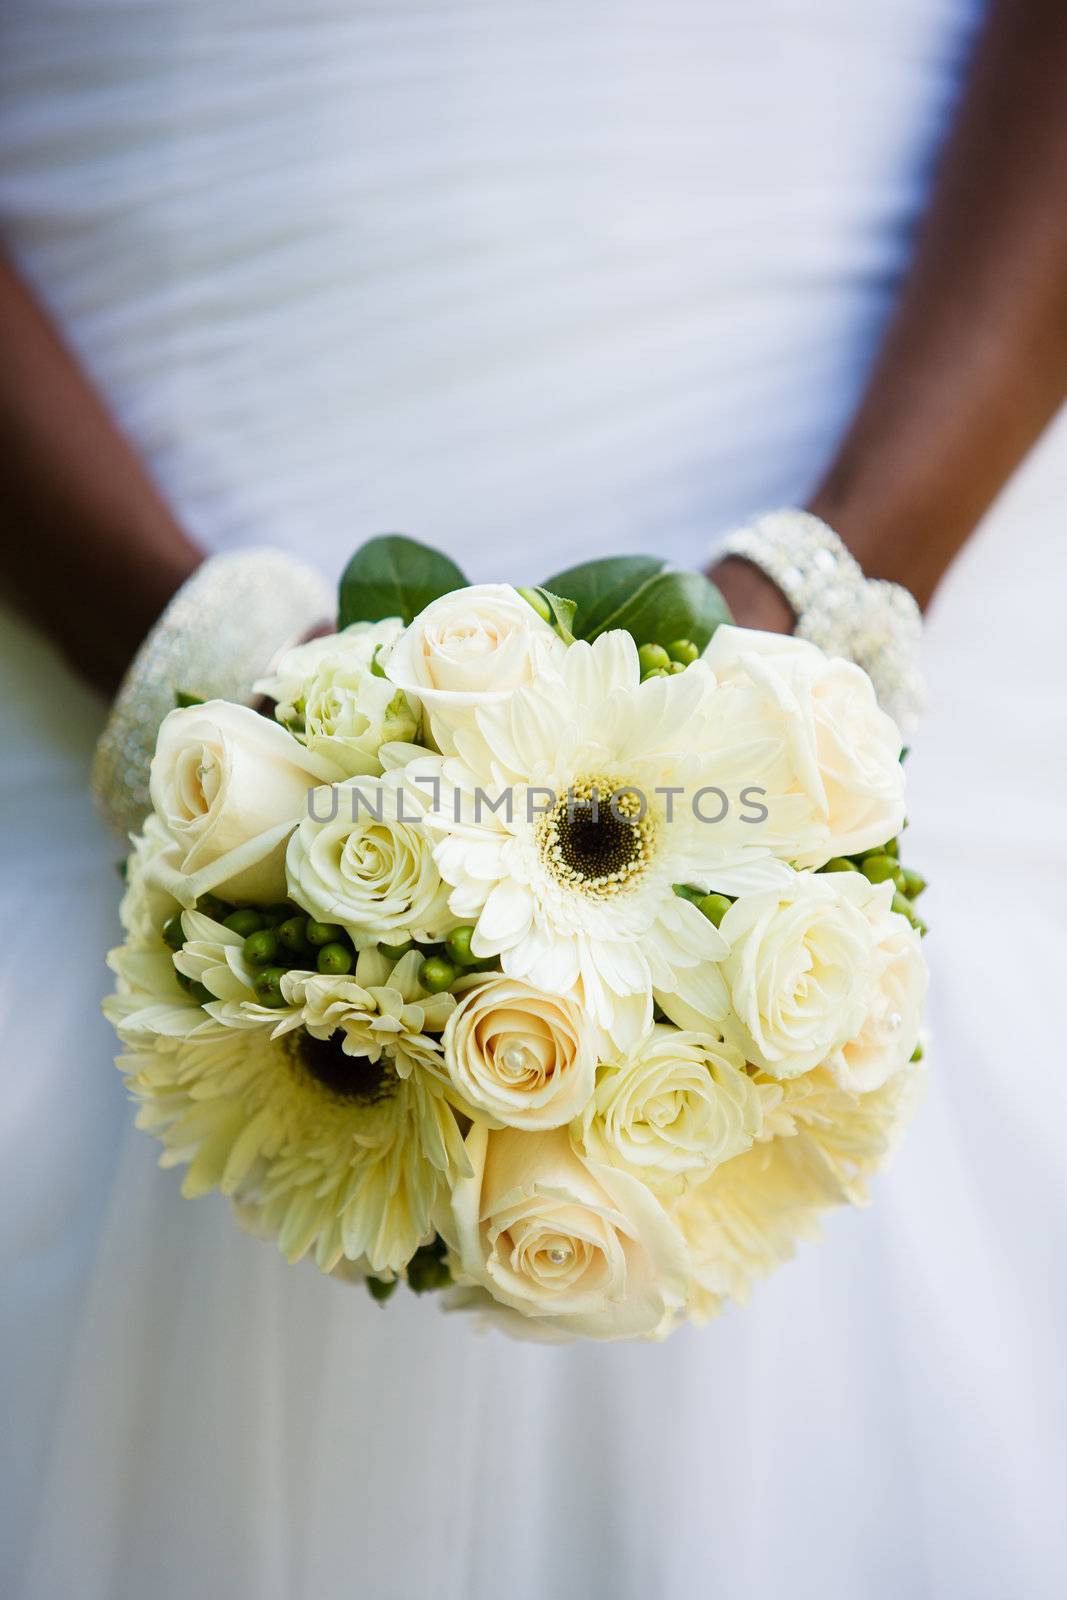 Black woman holding a wedding bouquet